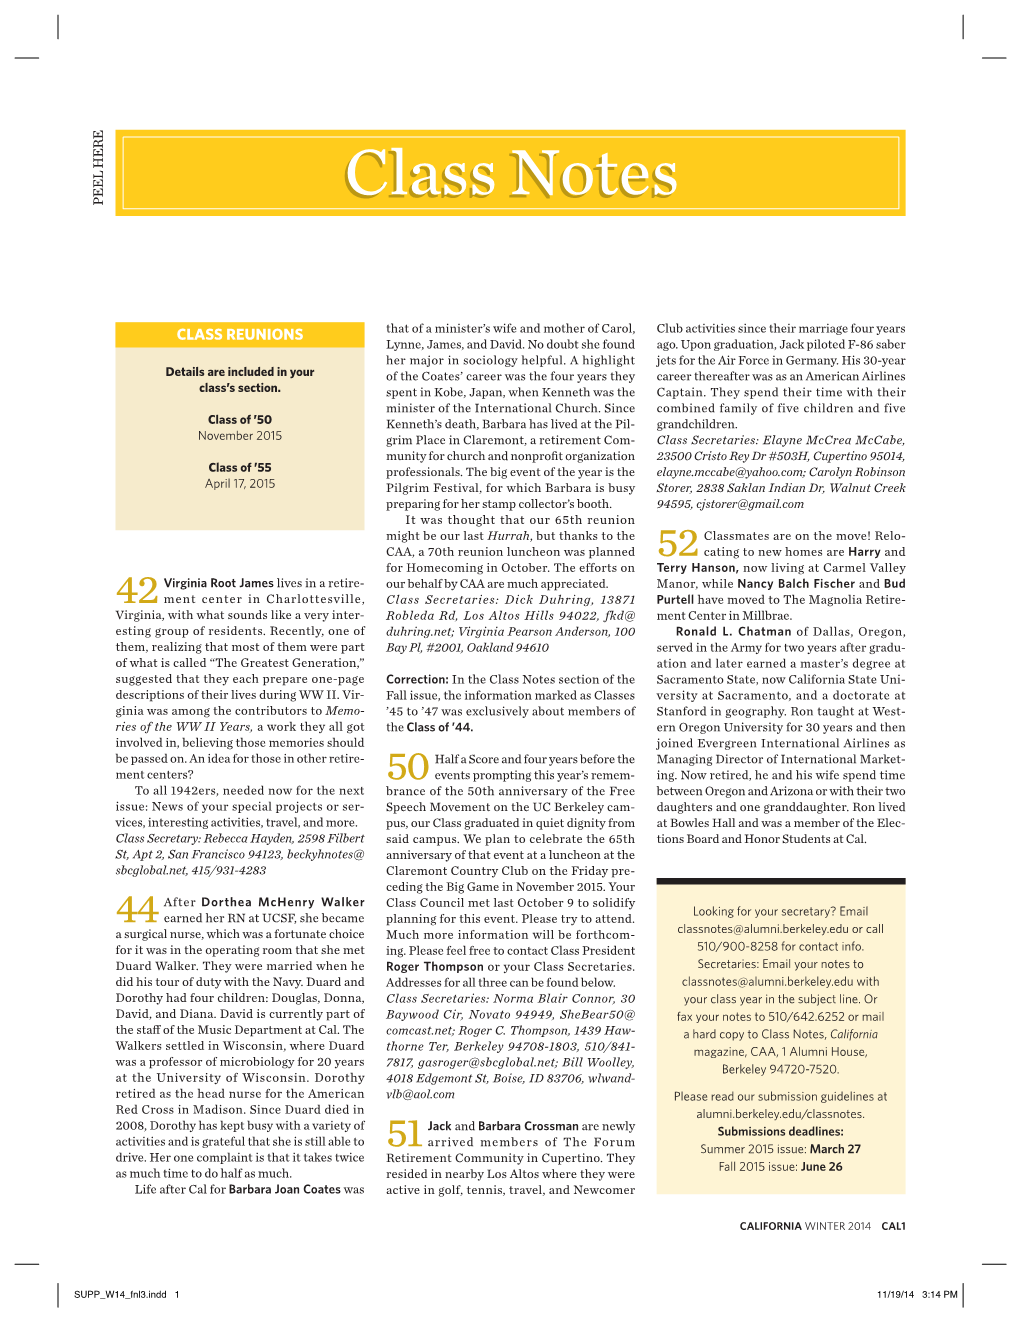 Class Notes Winter 2014